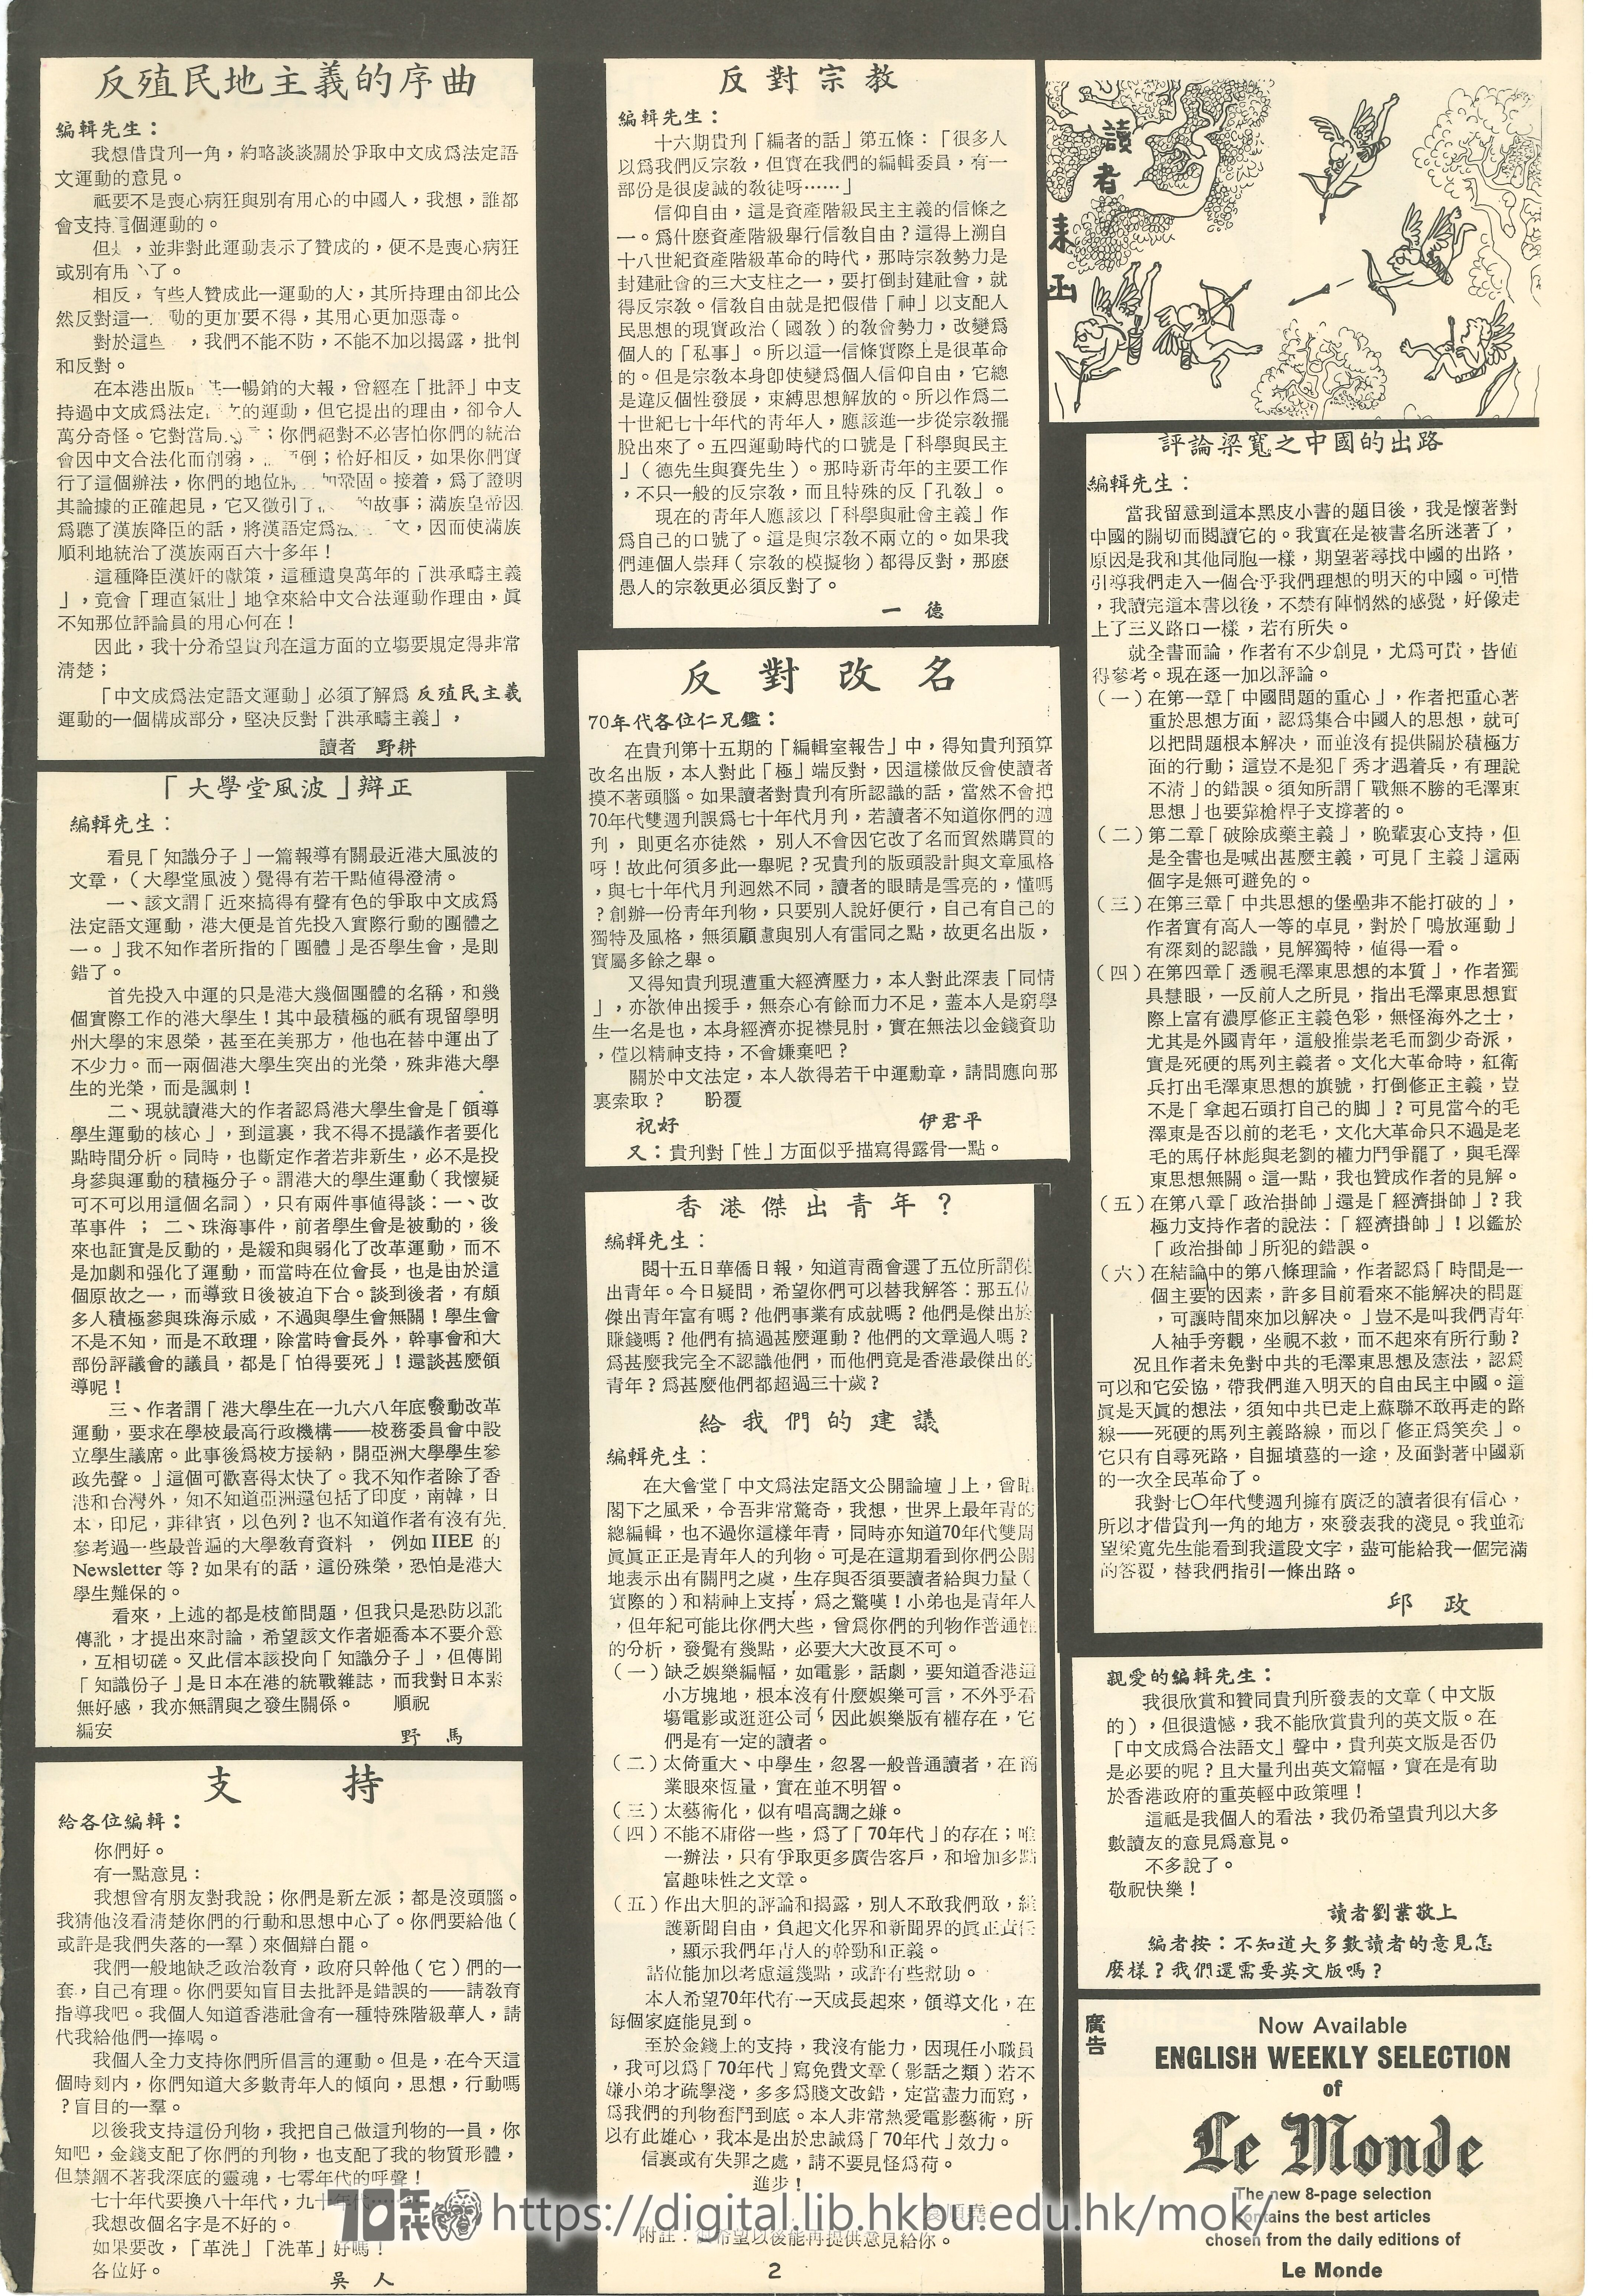  17 Dialectics of University Hall incident 野馬 